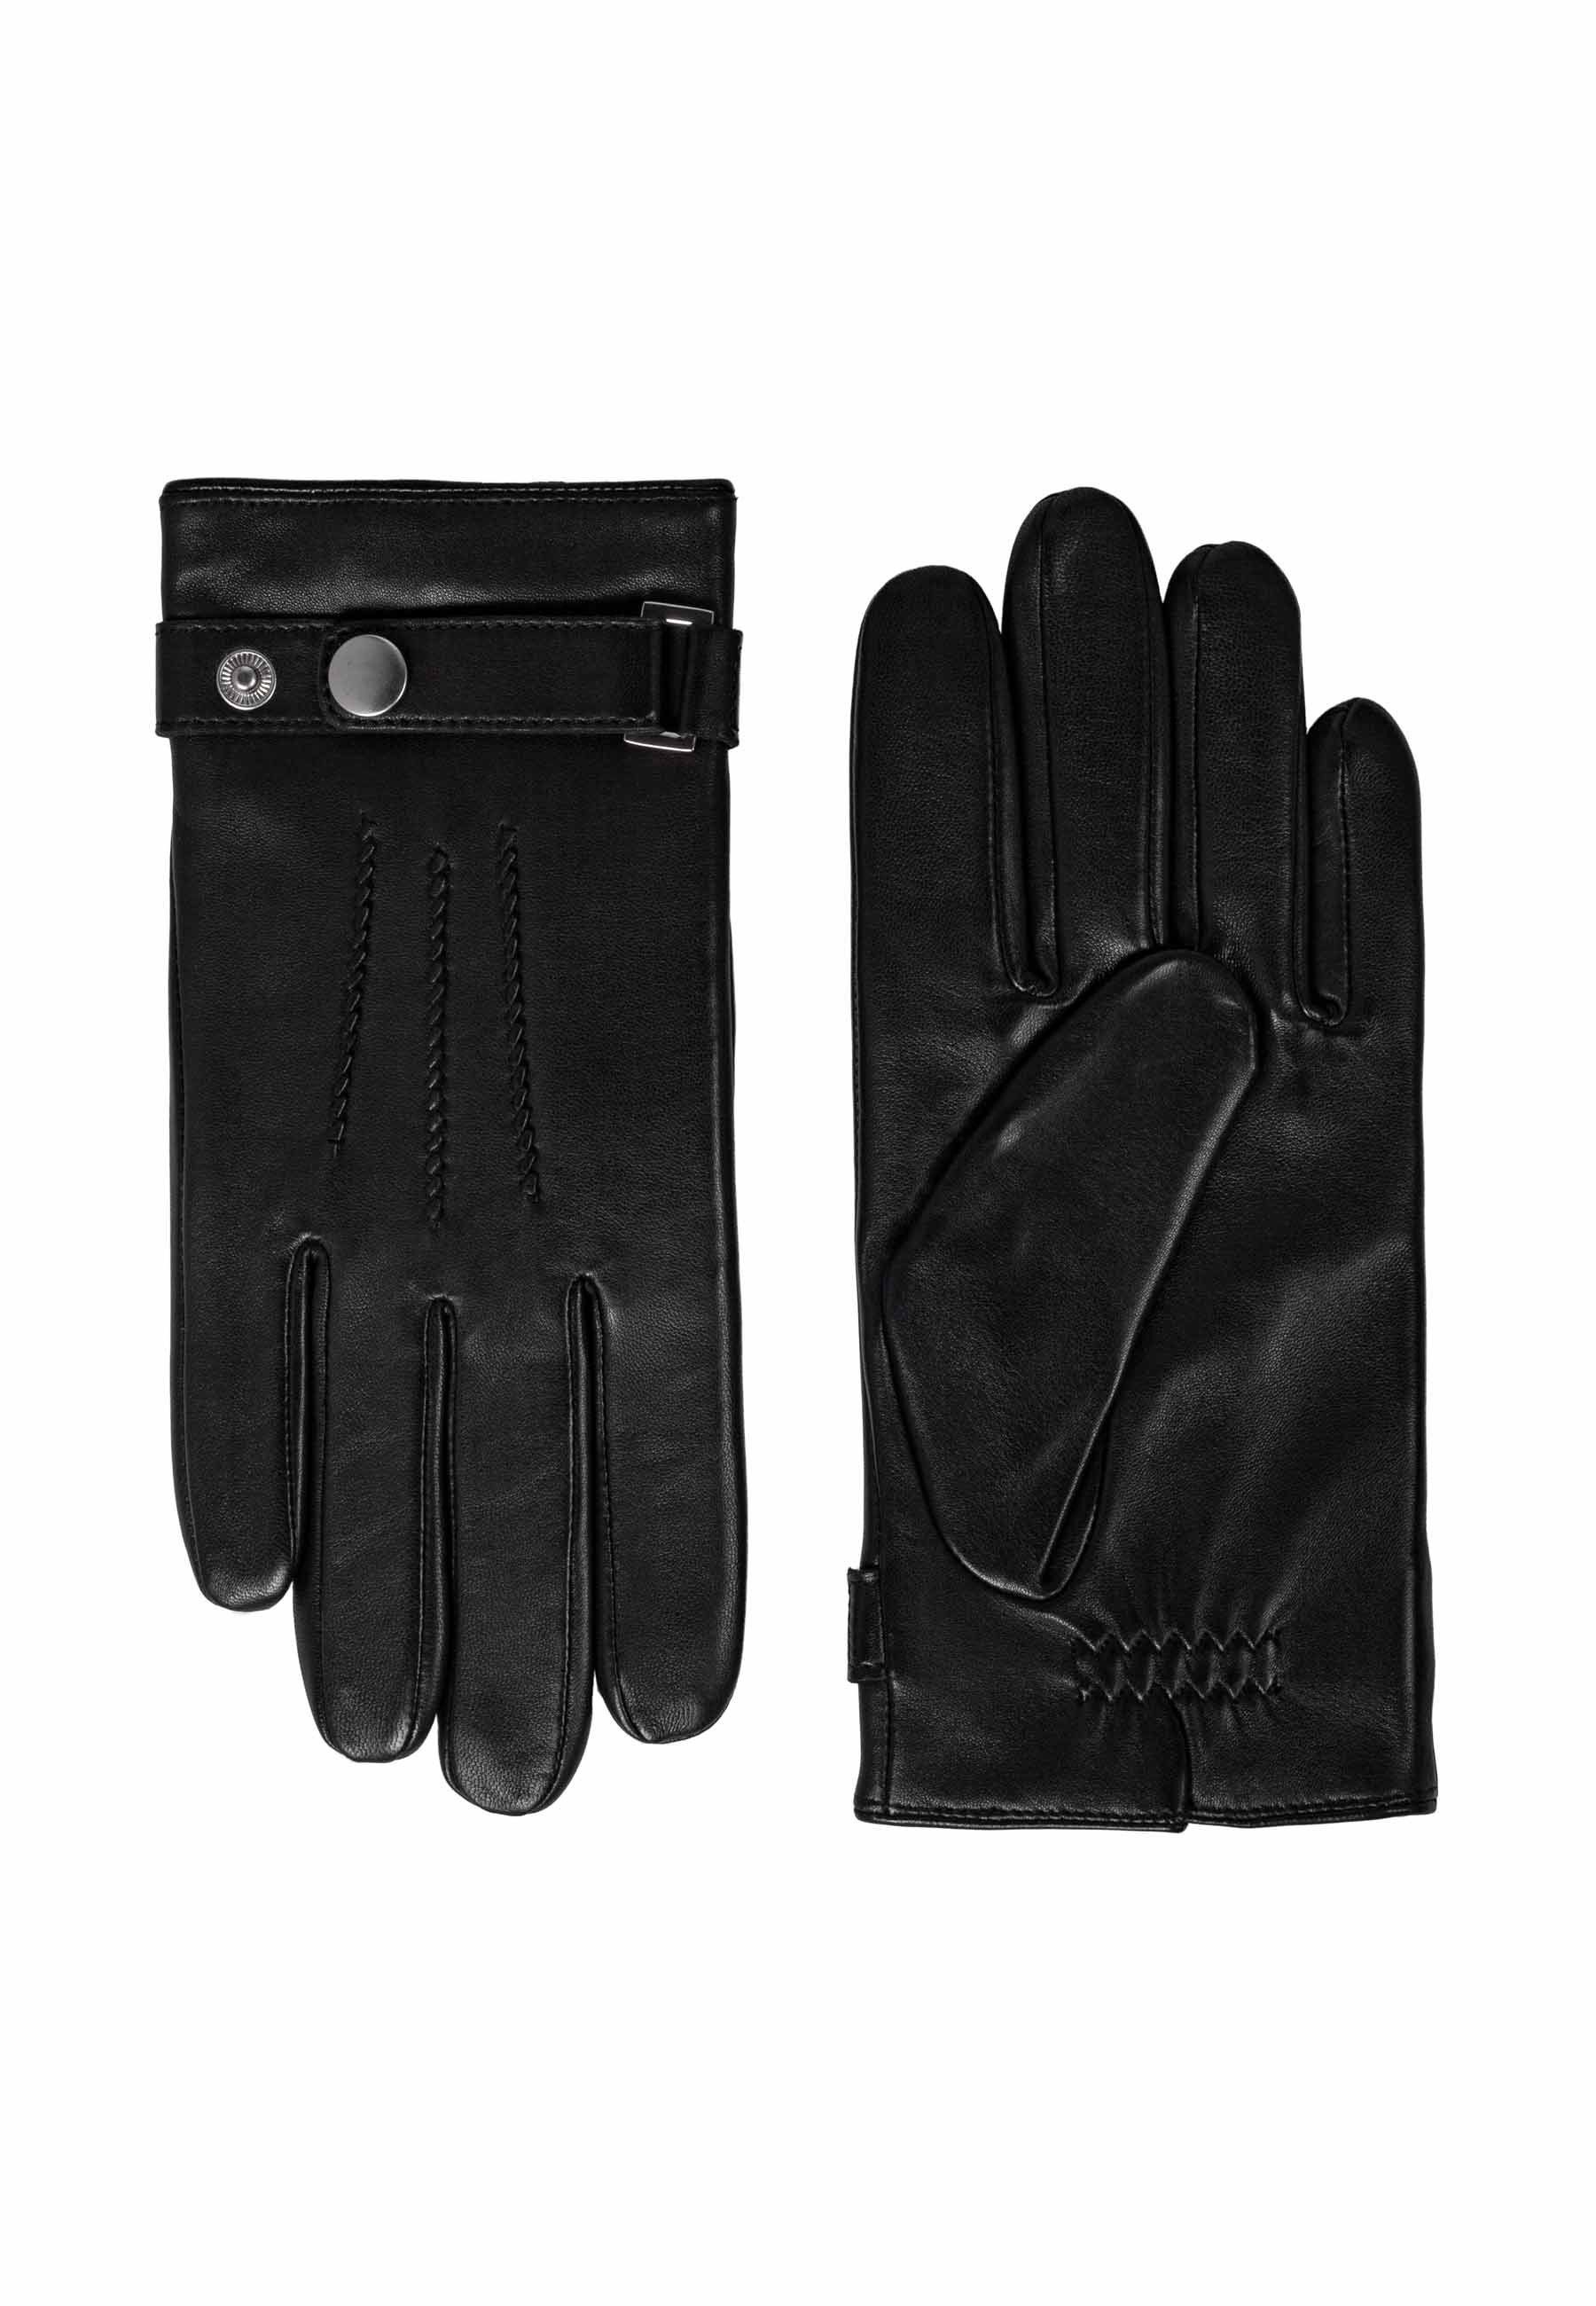 001 ok Lederhandschuhe Herrenhandschuh Diego black Gloves